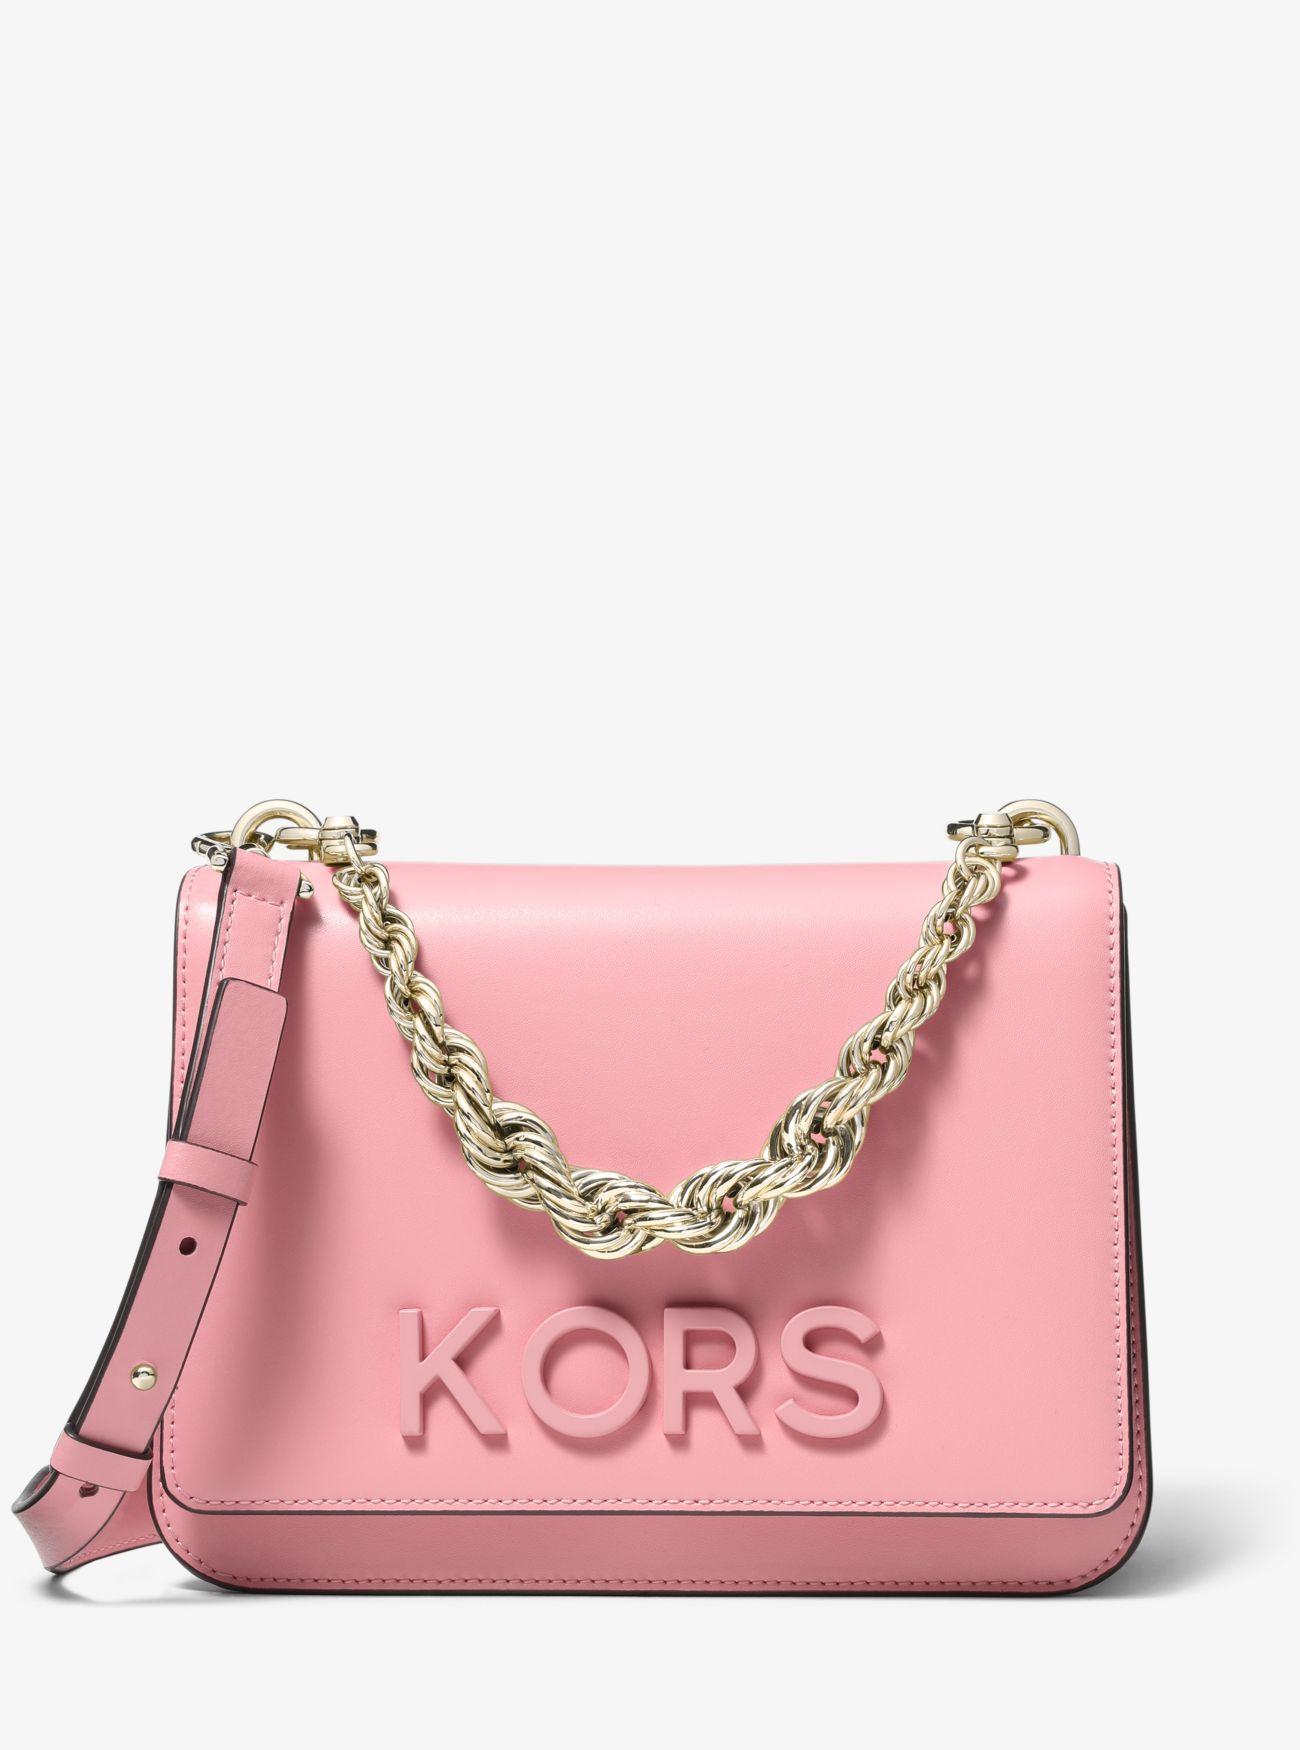 Michael Kors Mott Large Embellished Leather Crossbody Bag in Pink - Lyst